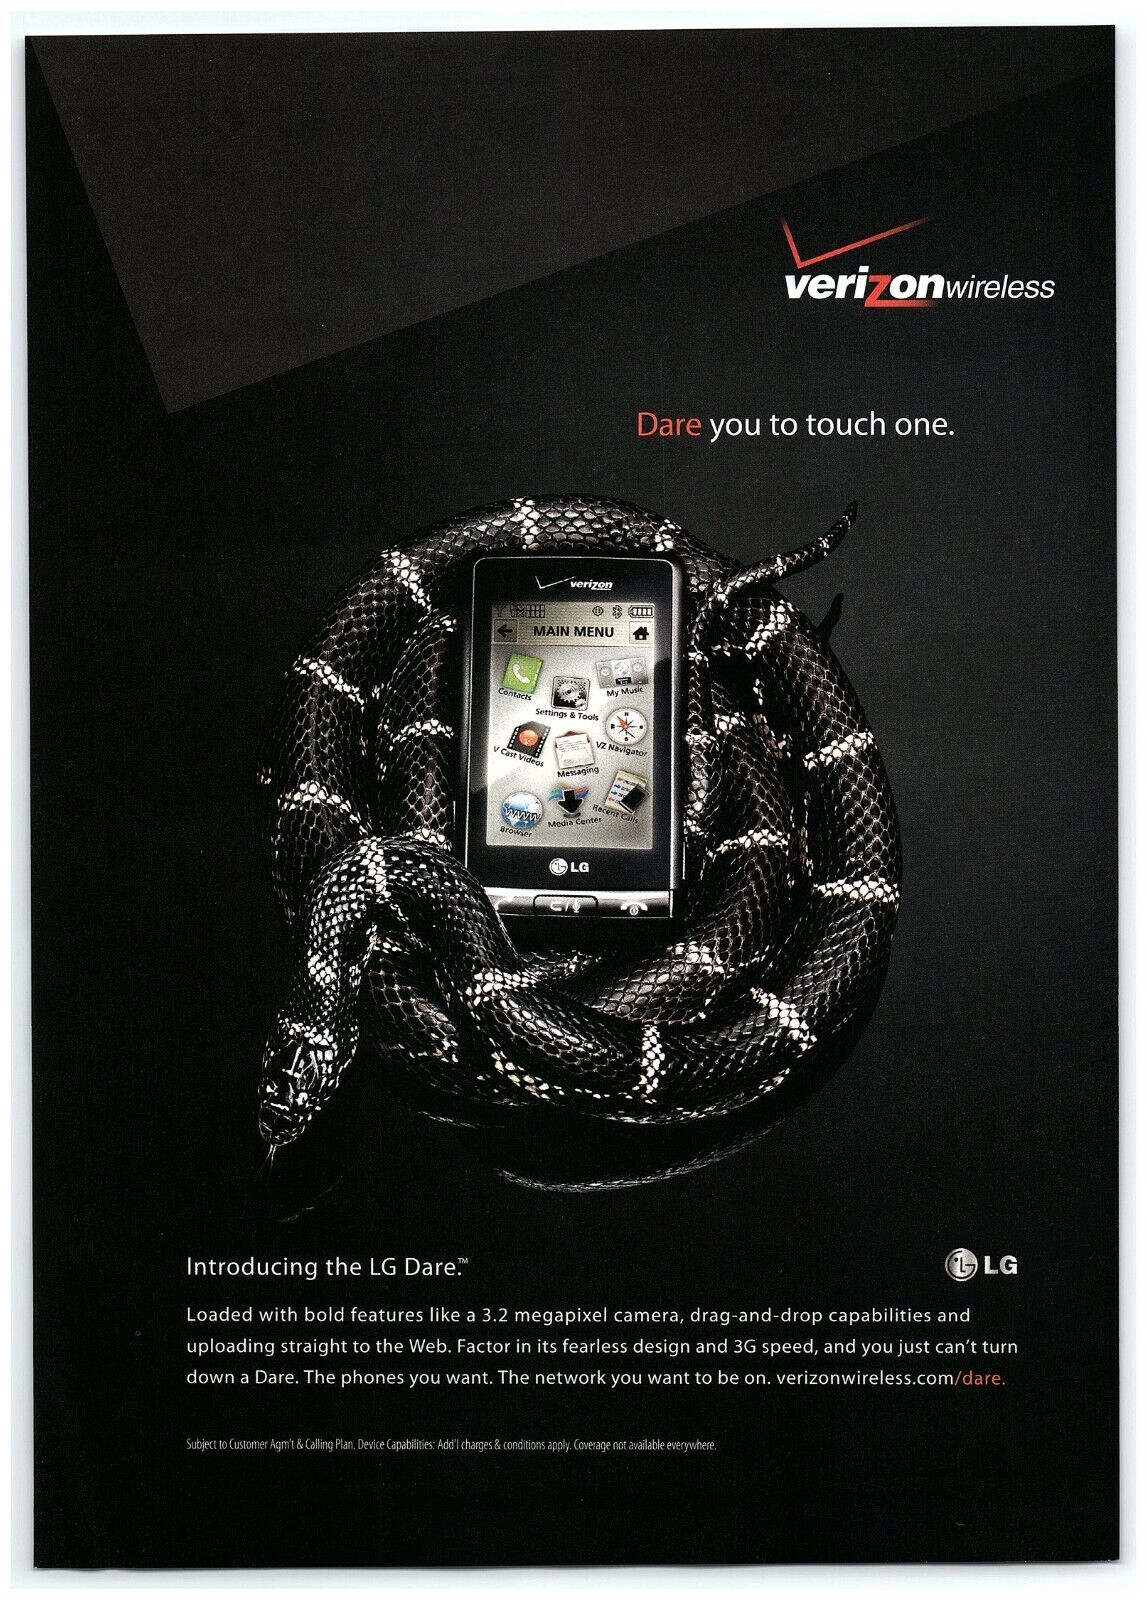 2008 Verizon Wireless Print Ad, LG Dare Smartphone Dare You To Touch One Snake